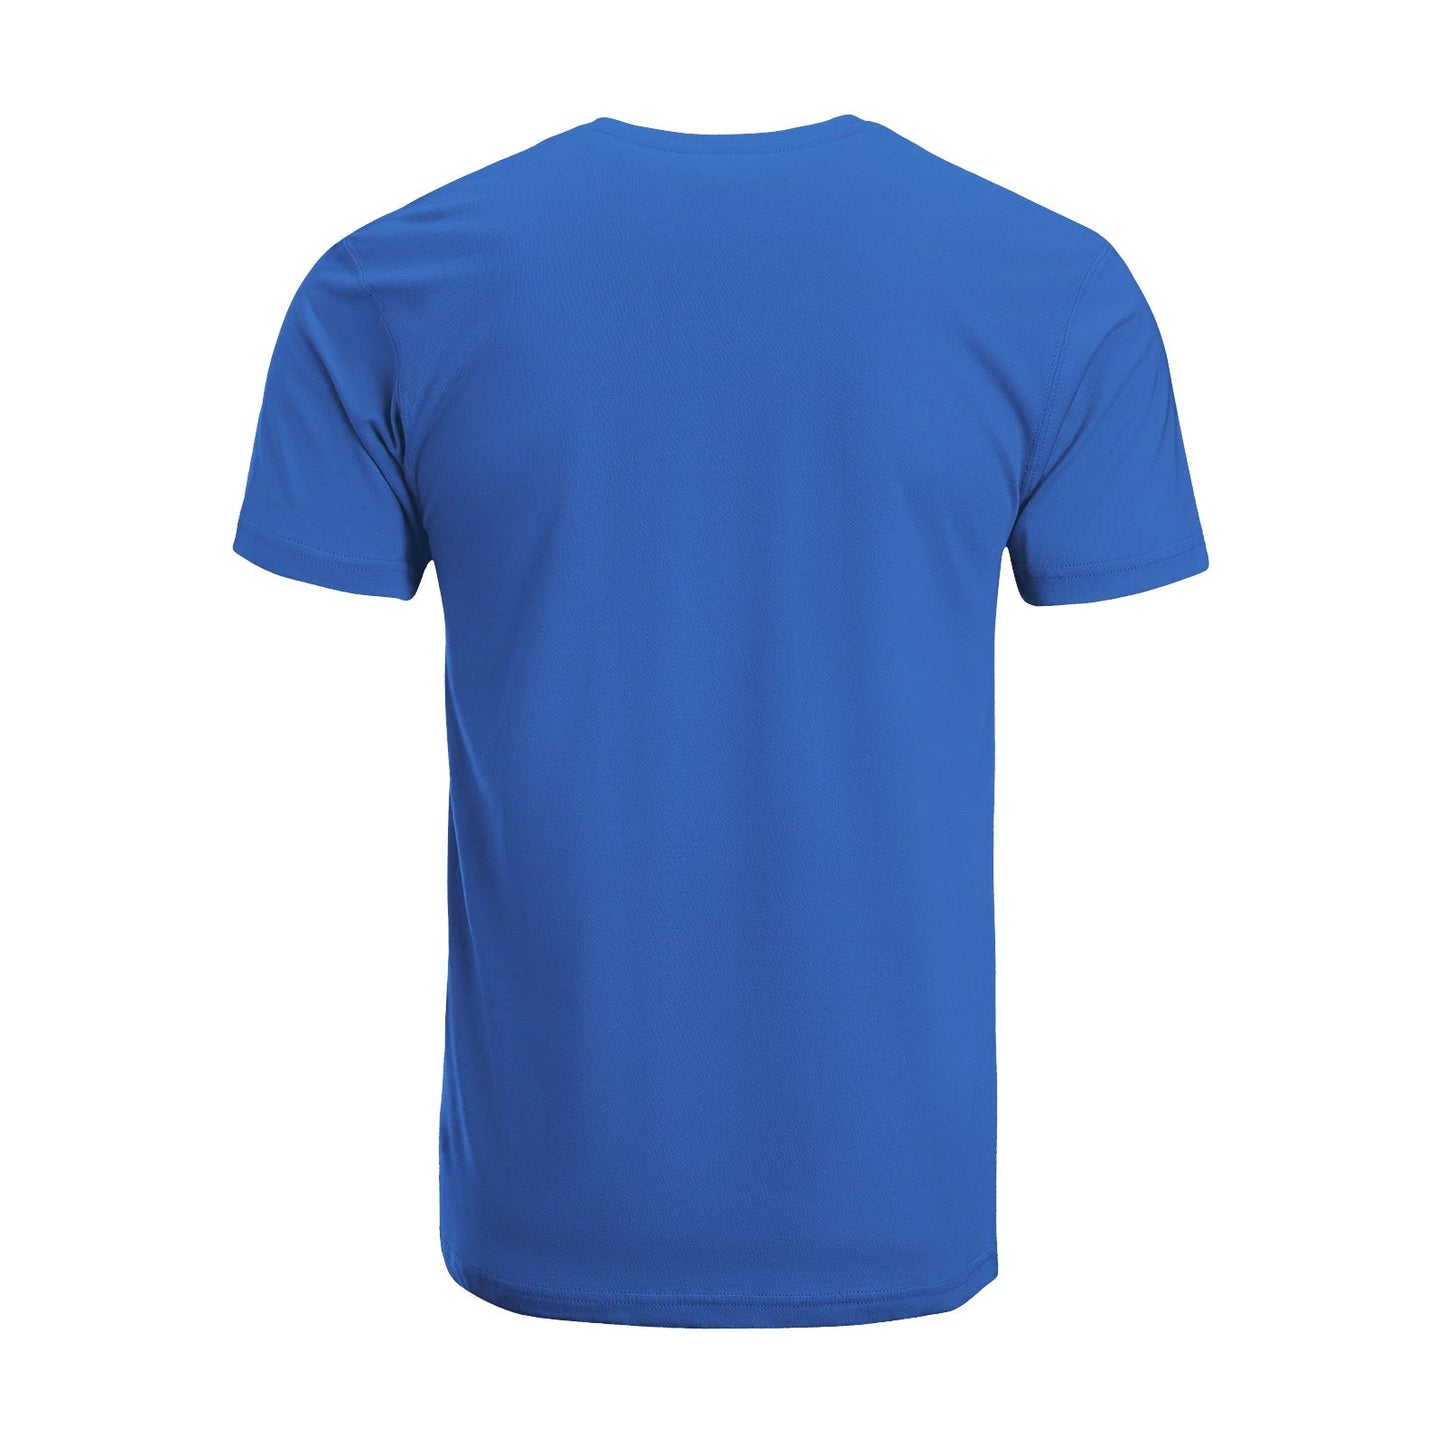 Unisex Short Sleeve Crew Neck Cotton Jersey T-Shirt MOM 34